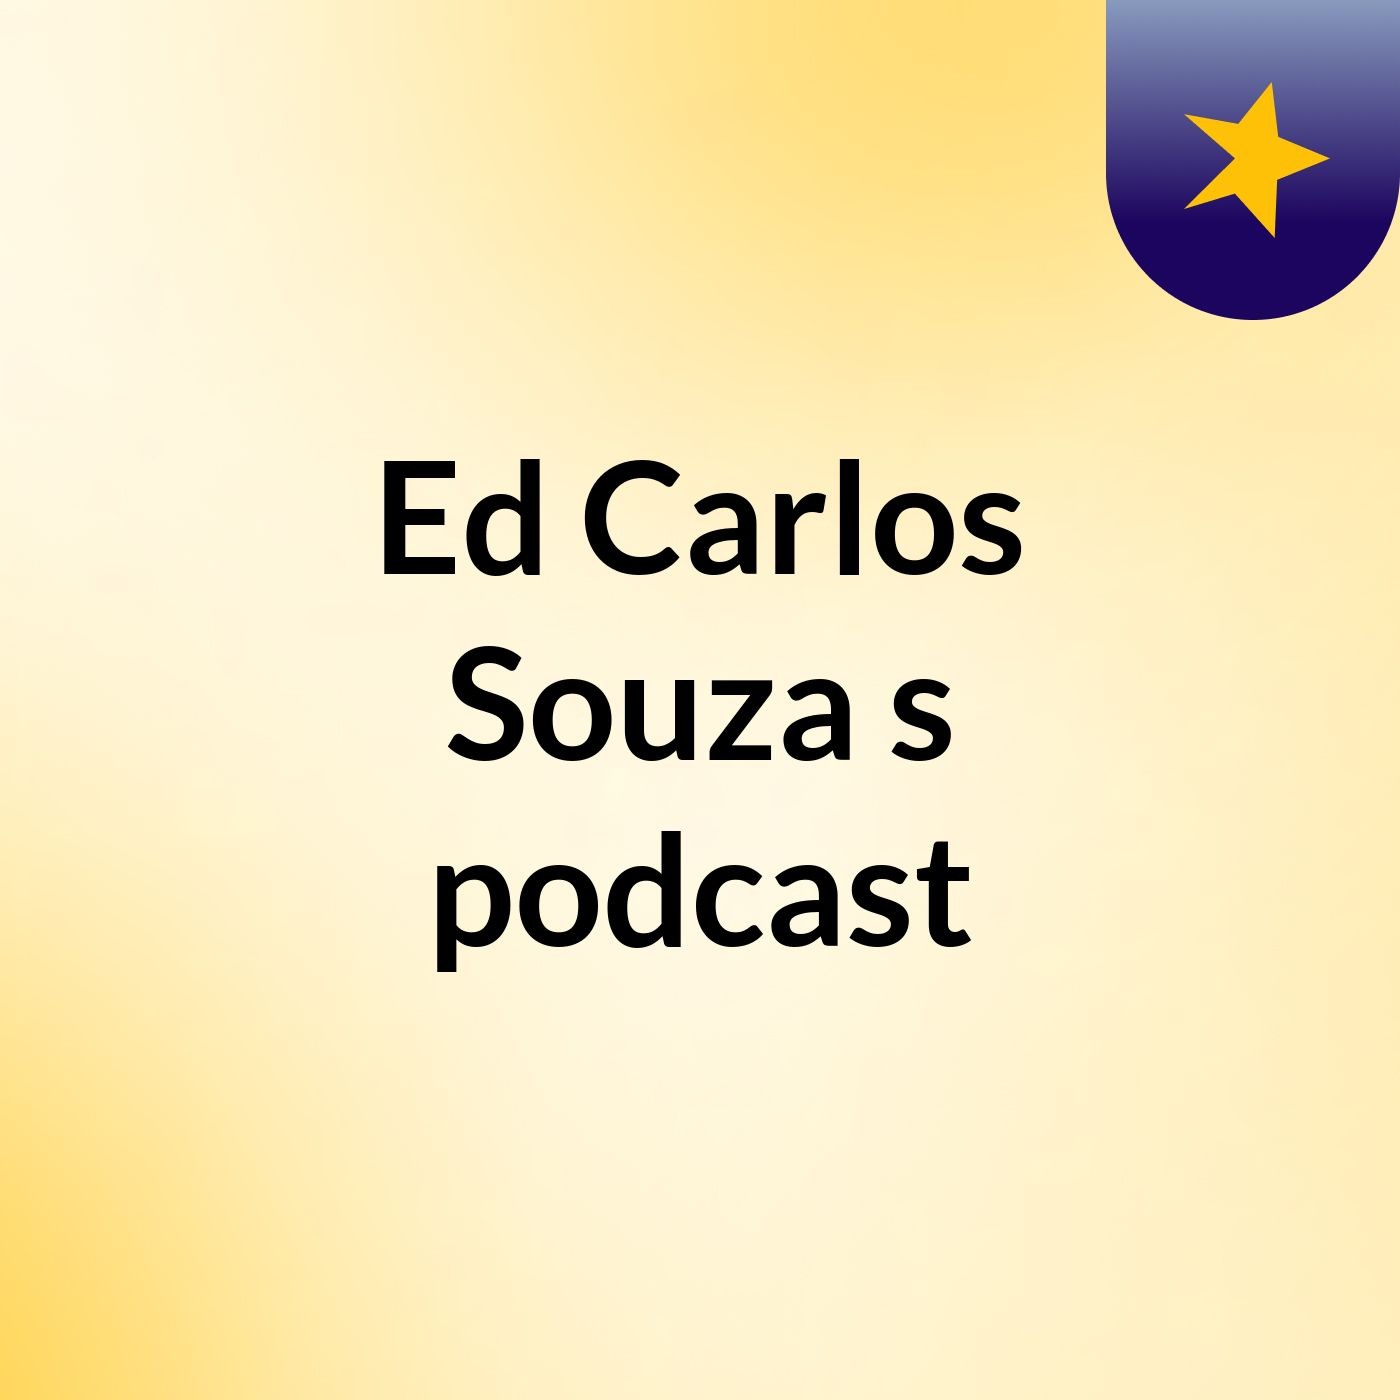 Ed Carlos Souza's podcast